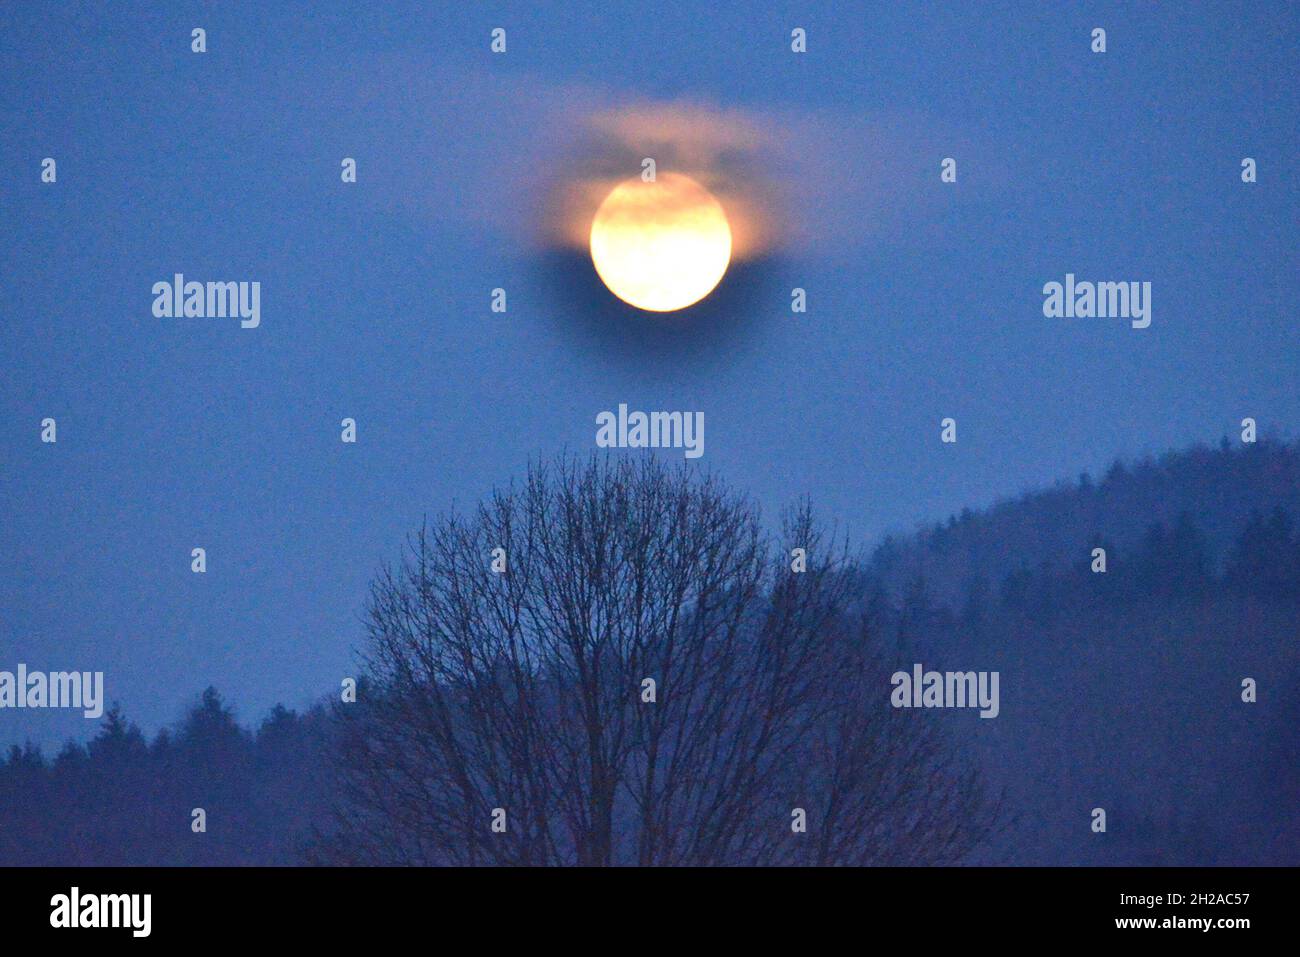 Vollmond über dem Grünberg, Österreich, Europa - pleine lune sur le Grünberg, Autriche, Europe Banque D'Images